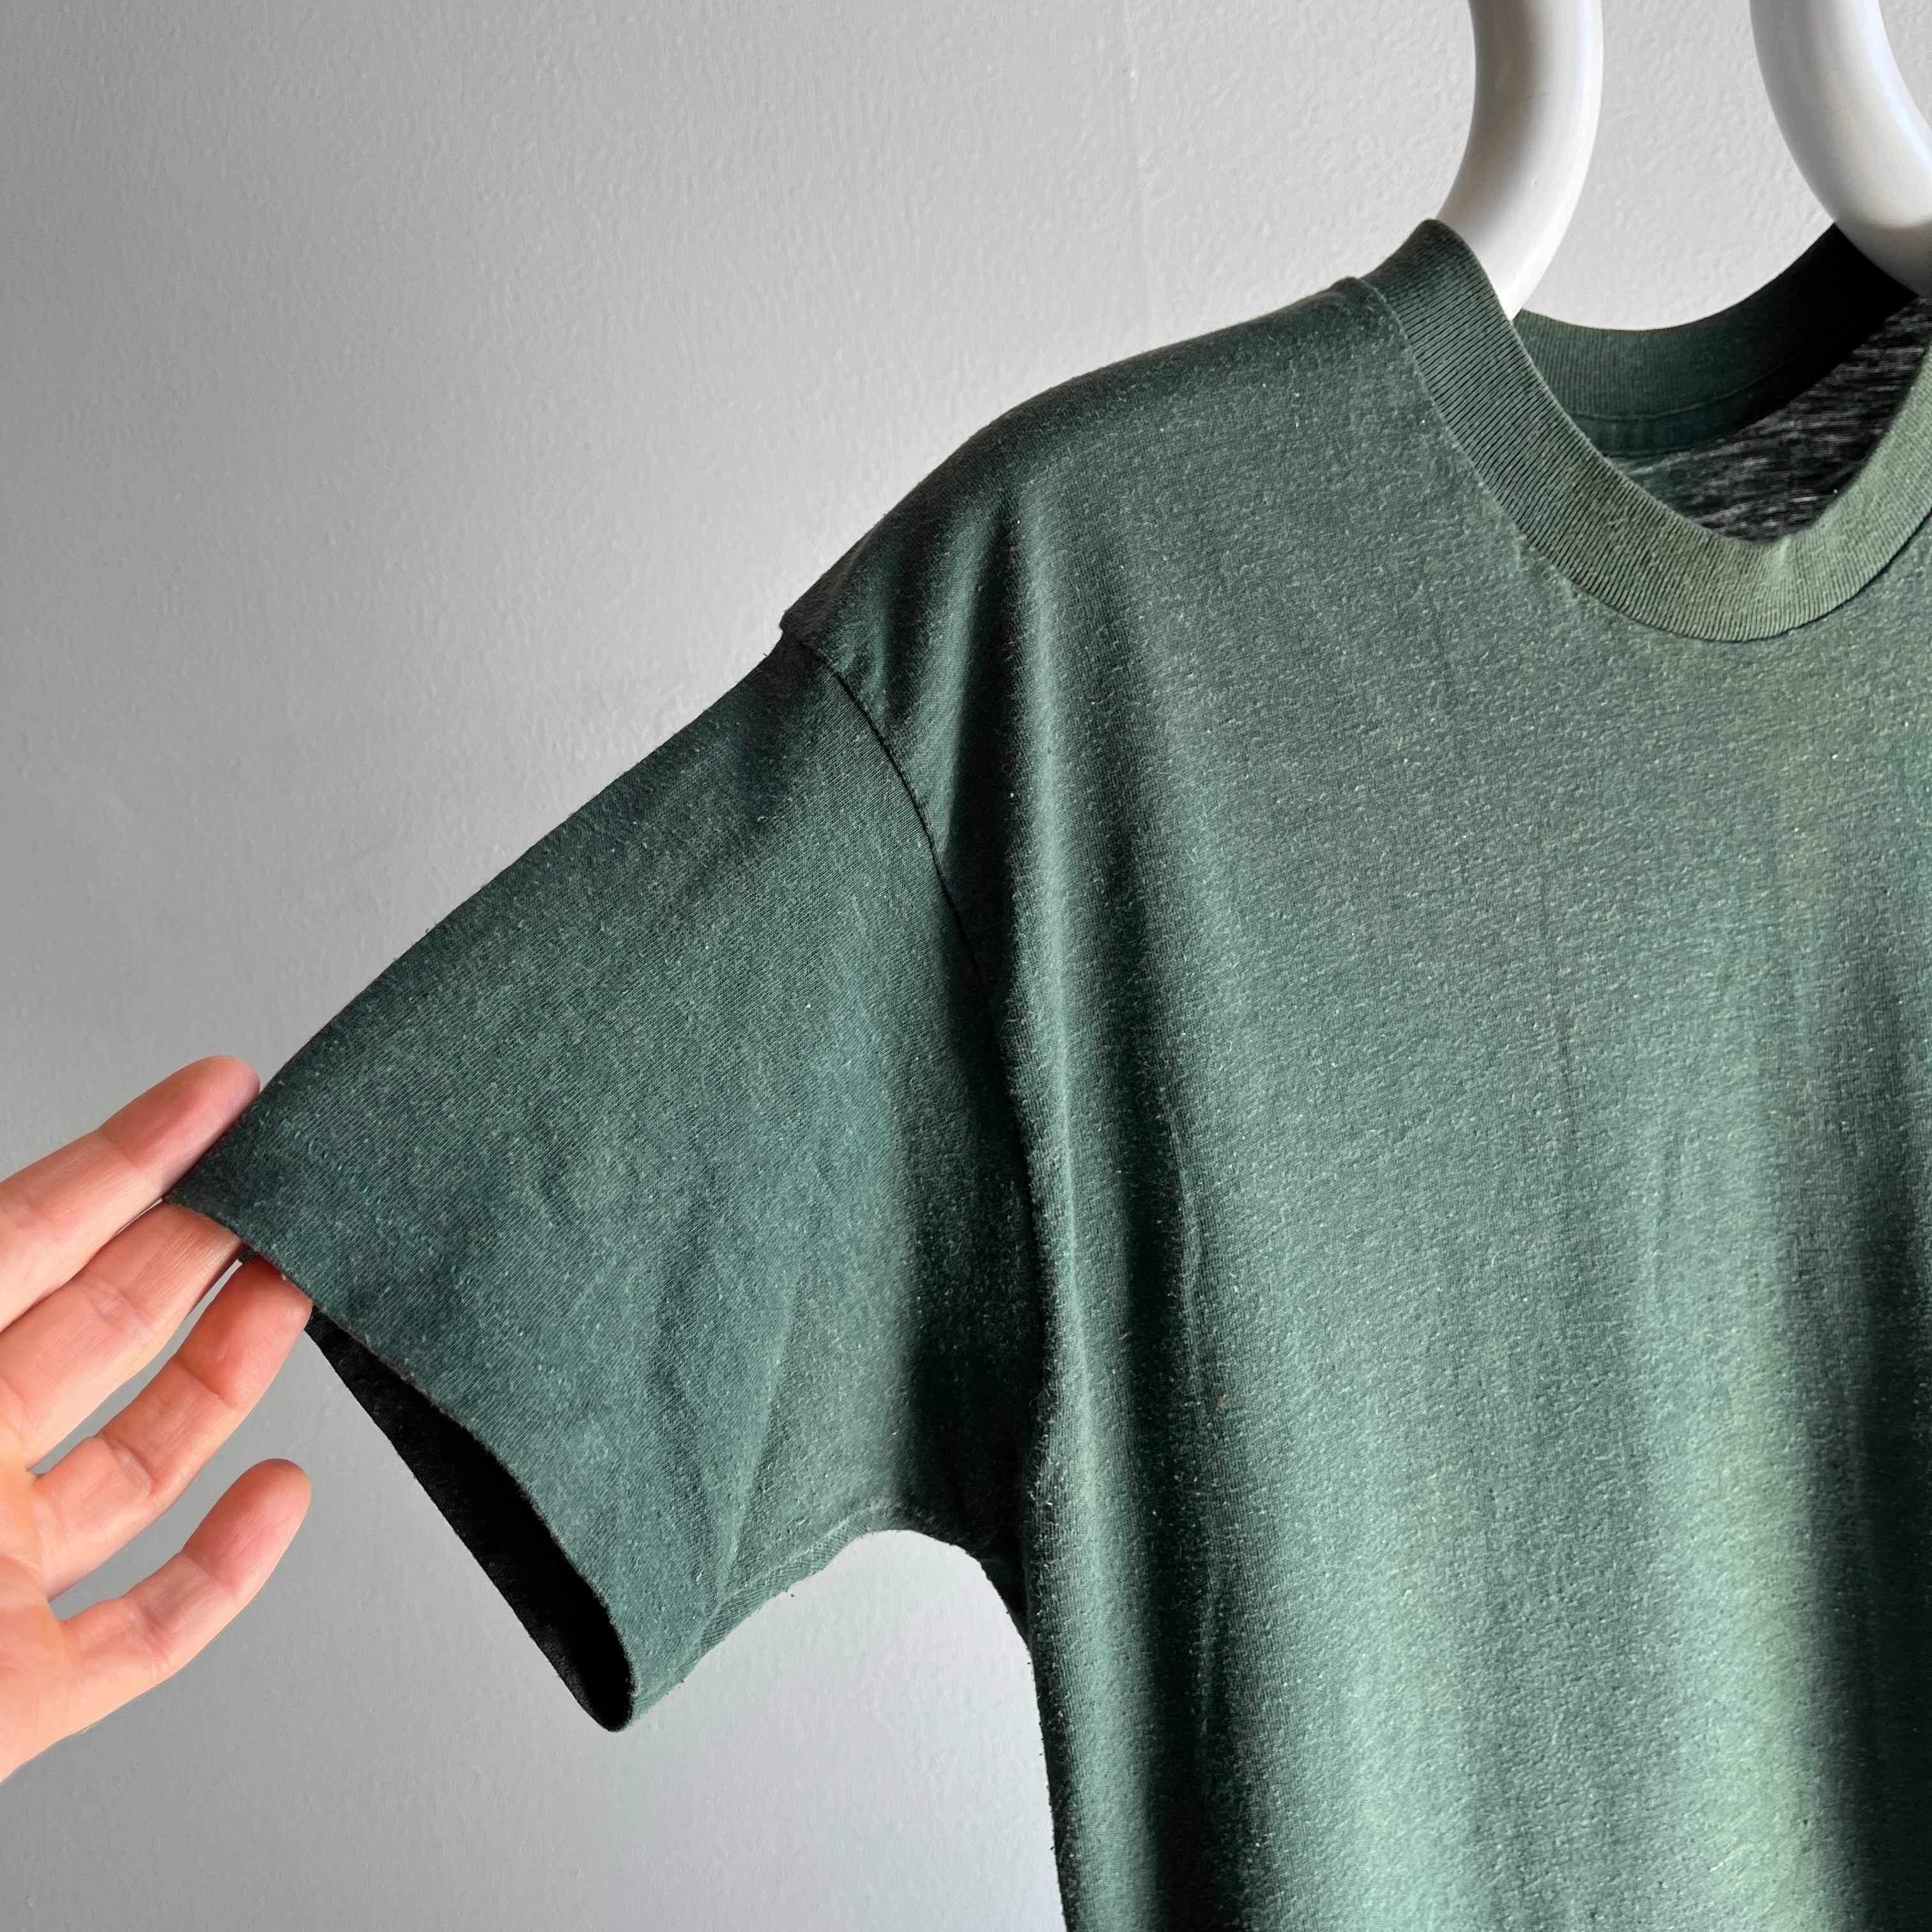 1970s Dark Olive Green Selvedge Triangle Pocket T-Shirt